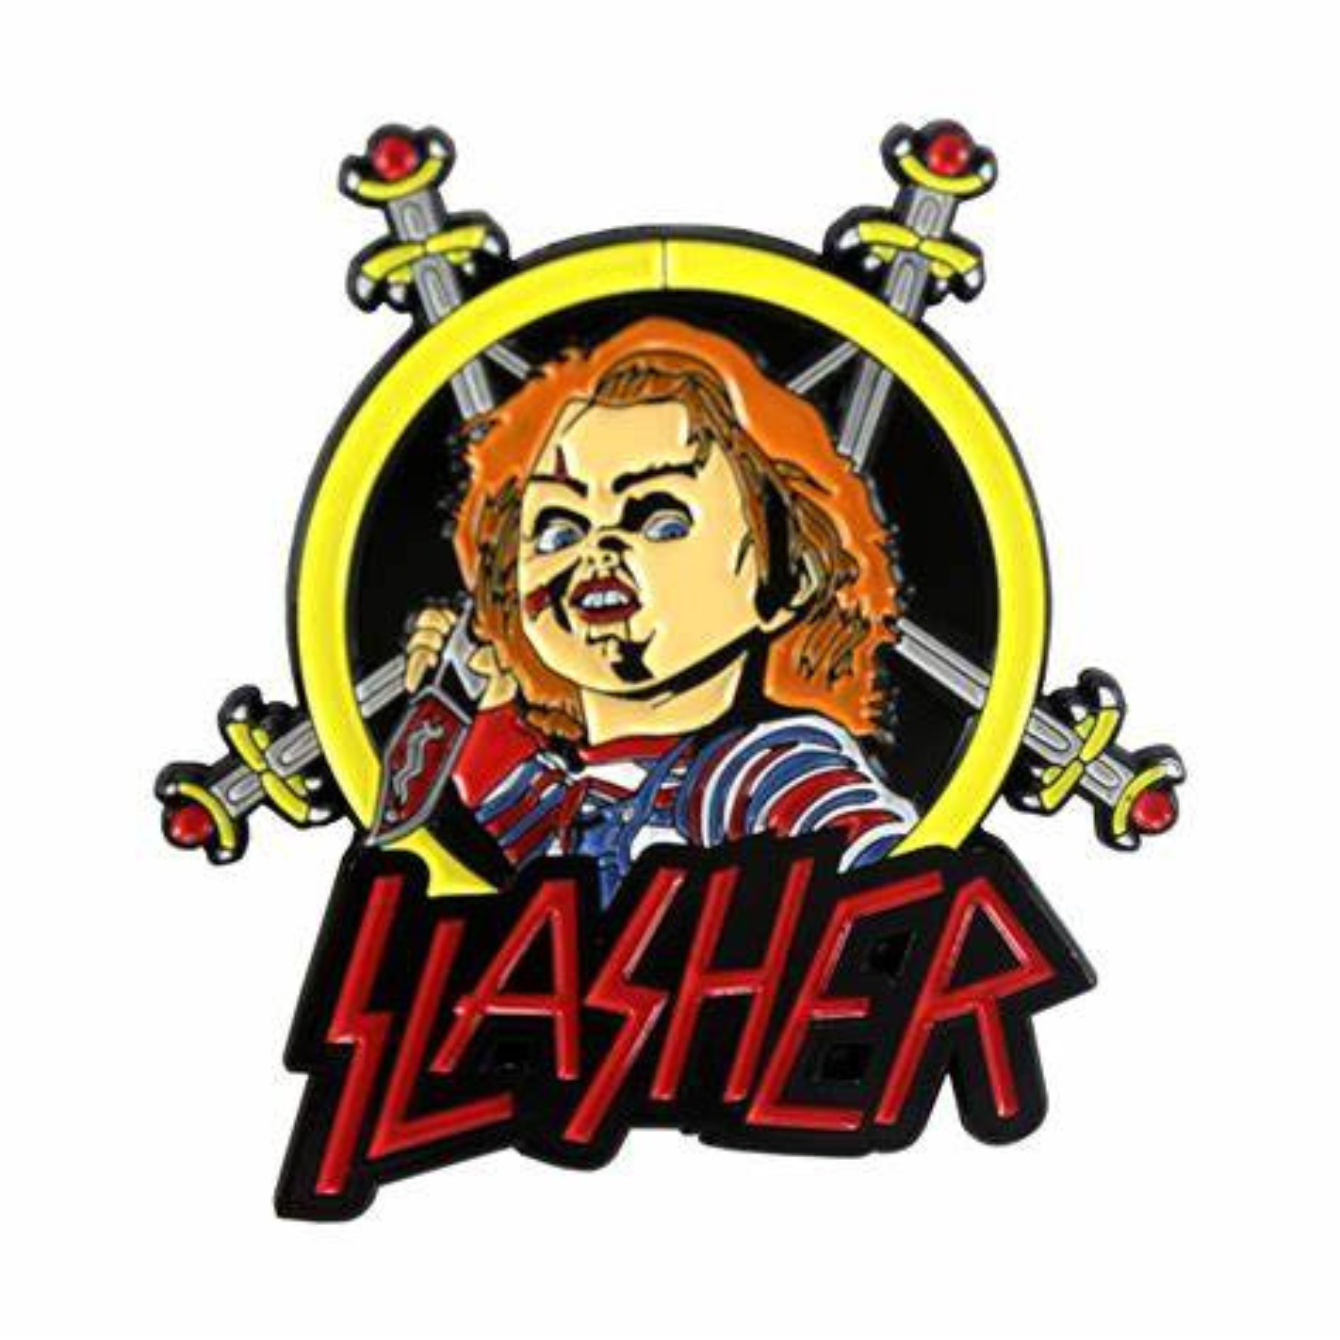 Slasher - Chucky Pin